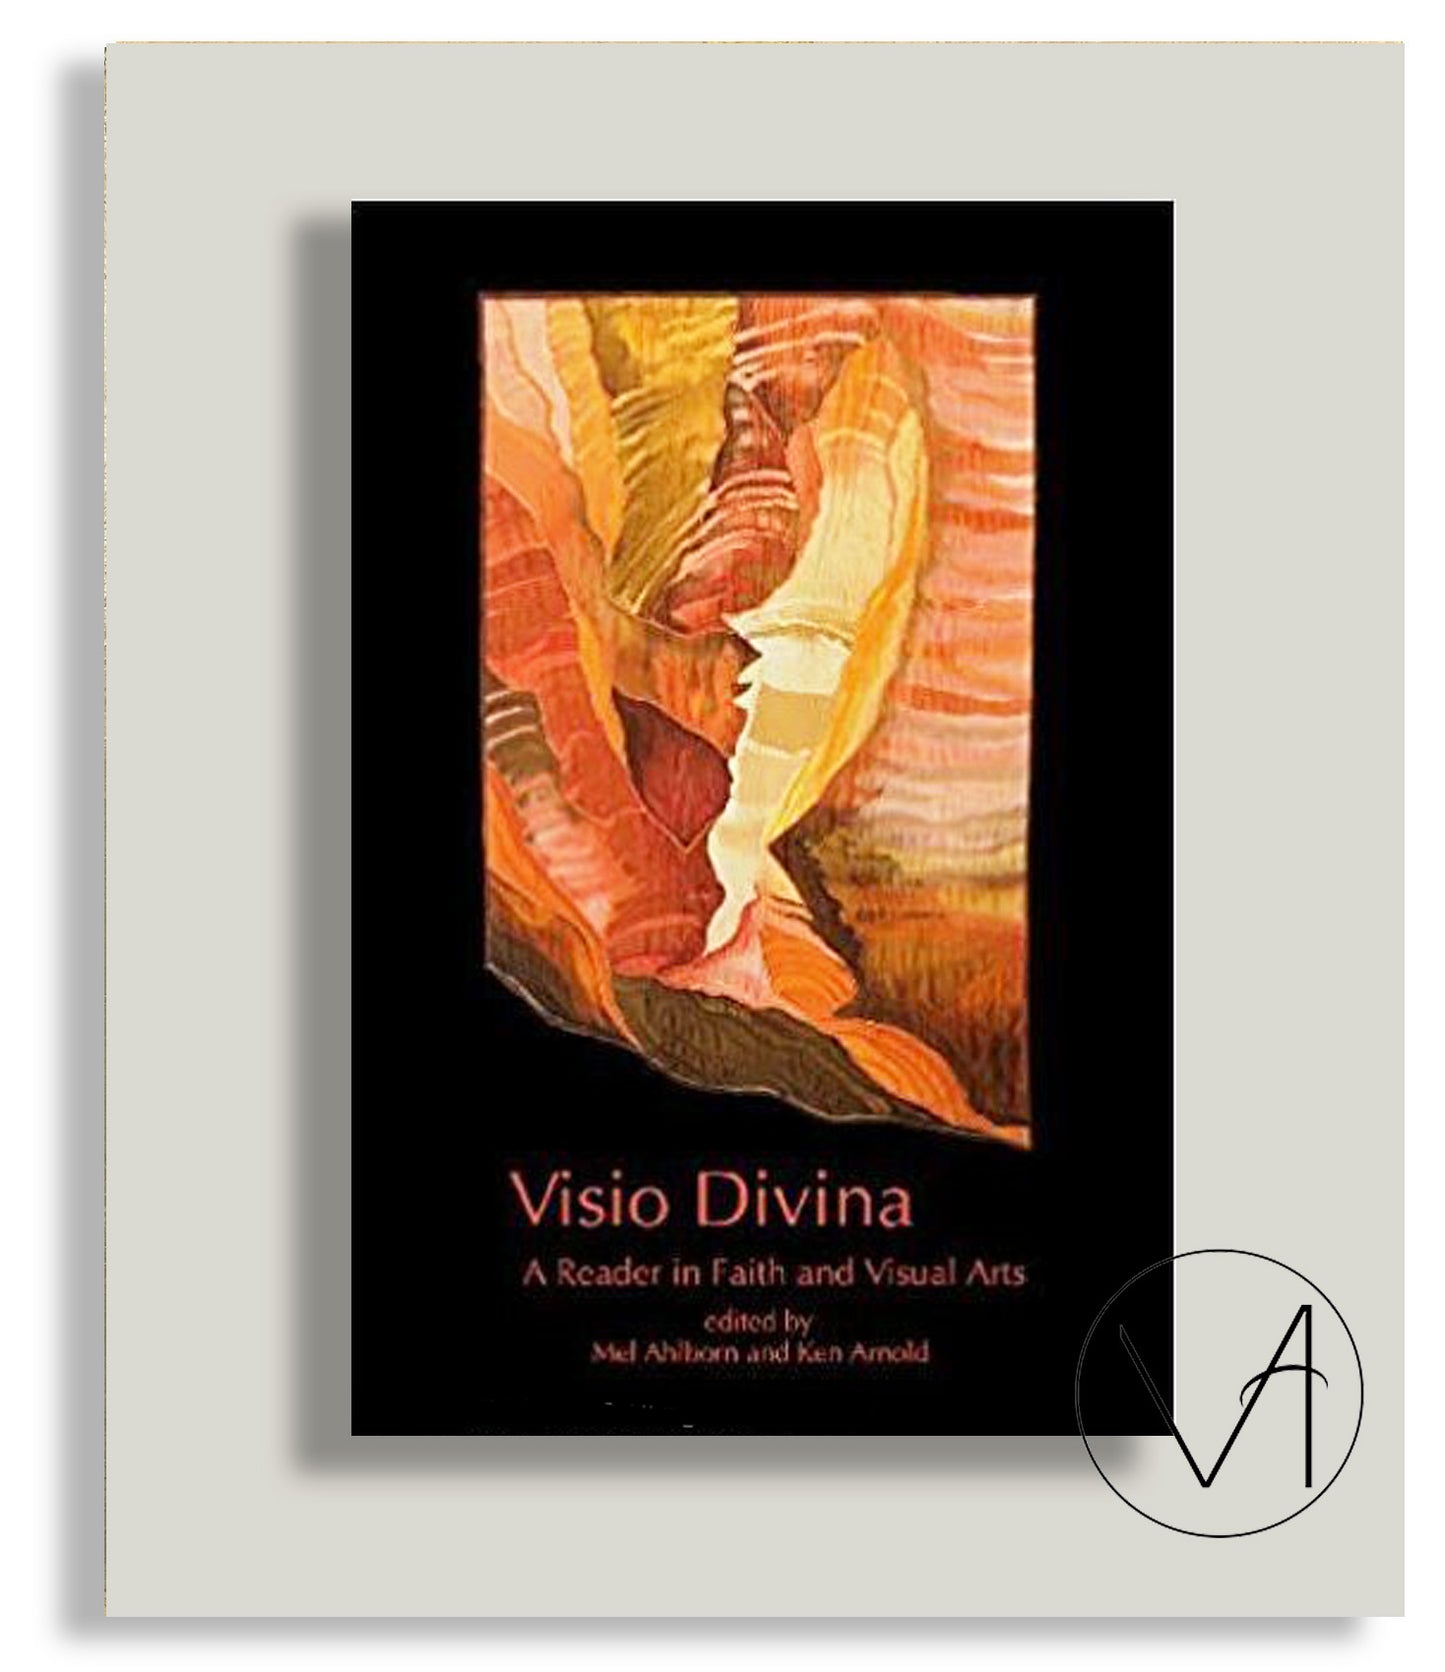 Visio Divina - A Reader in Faith and the Visual Arts by Mel Ahlborn